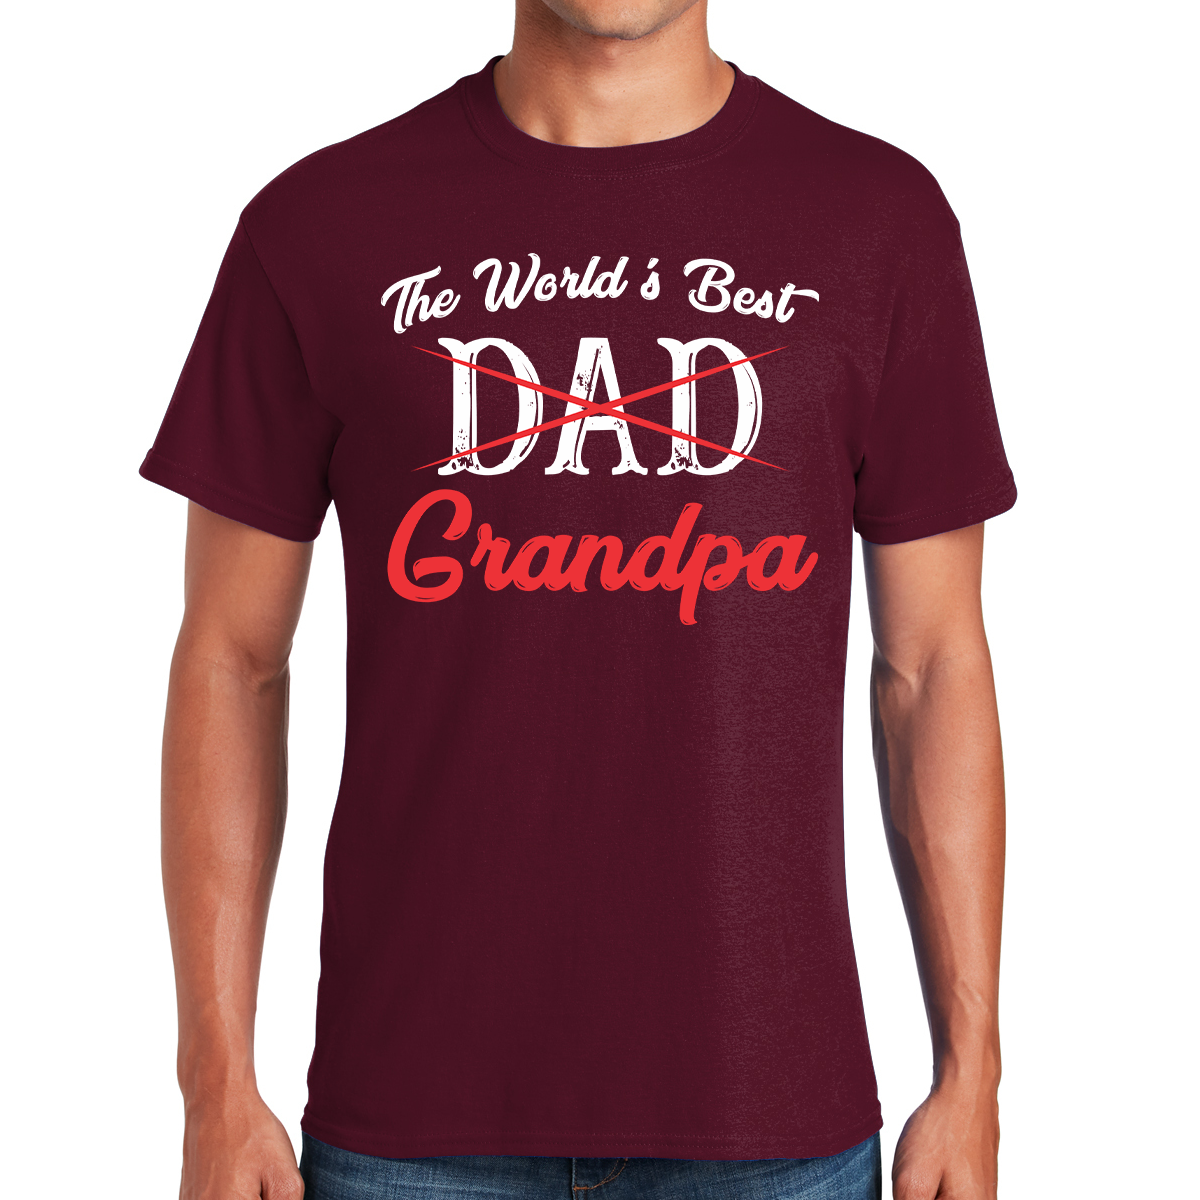 The World's Best Grandpa Timeless Love And Wisdom Gift For Grandpas T-shirt